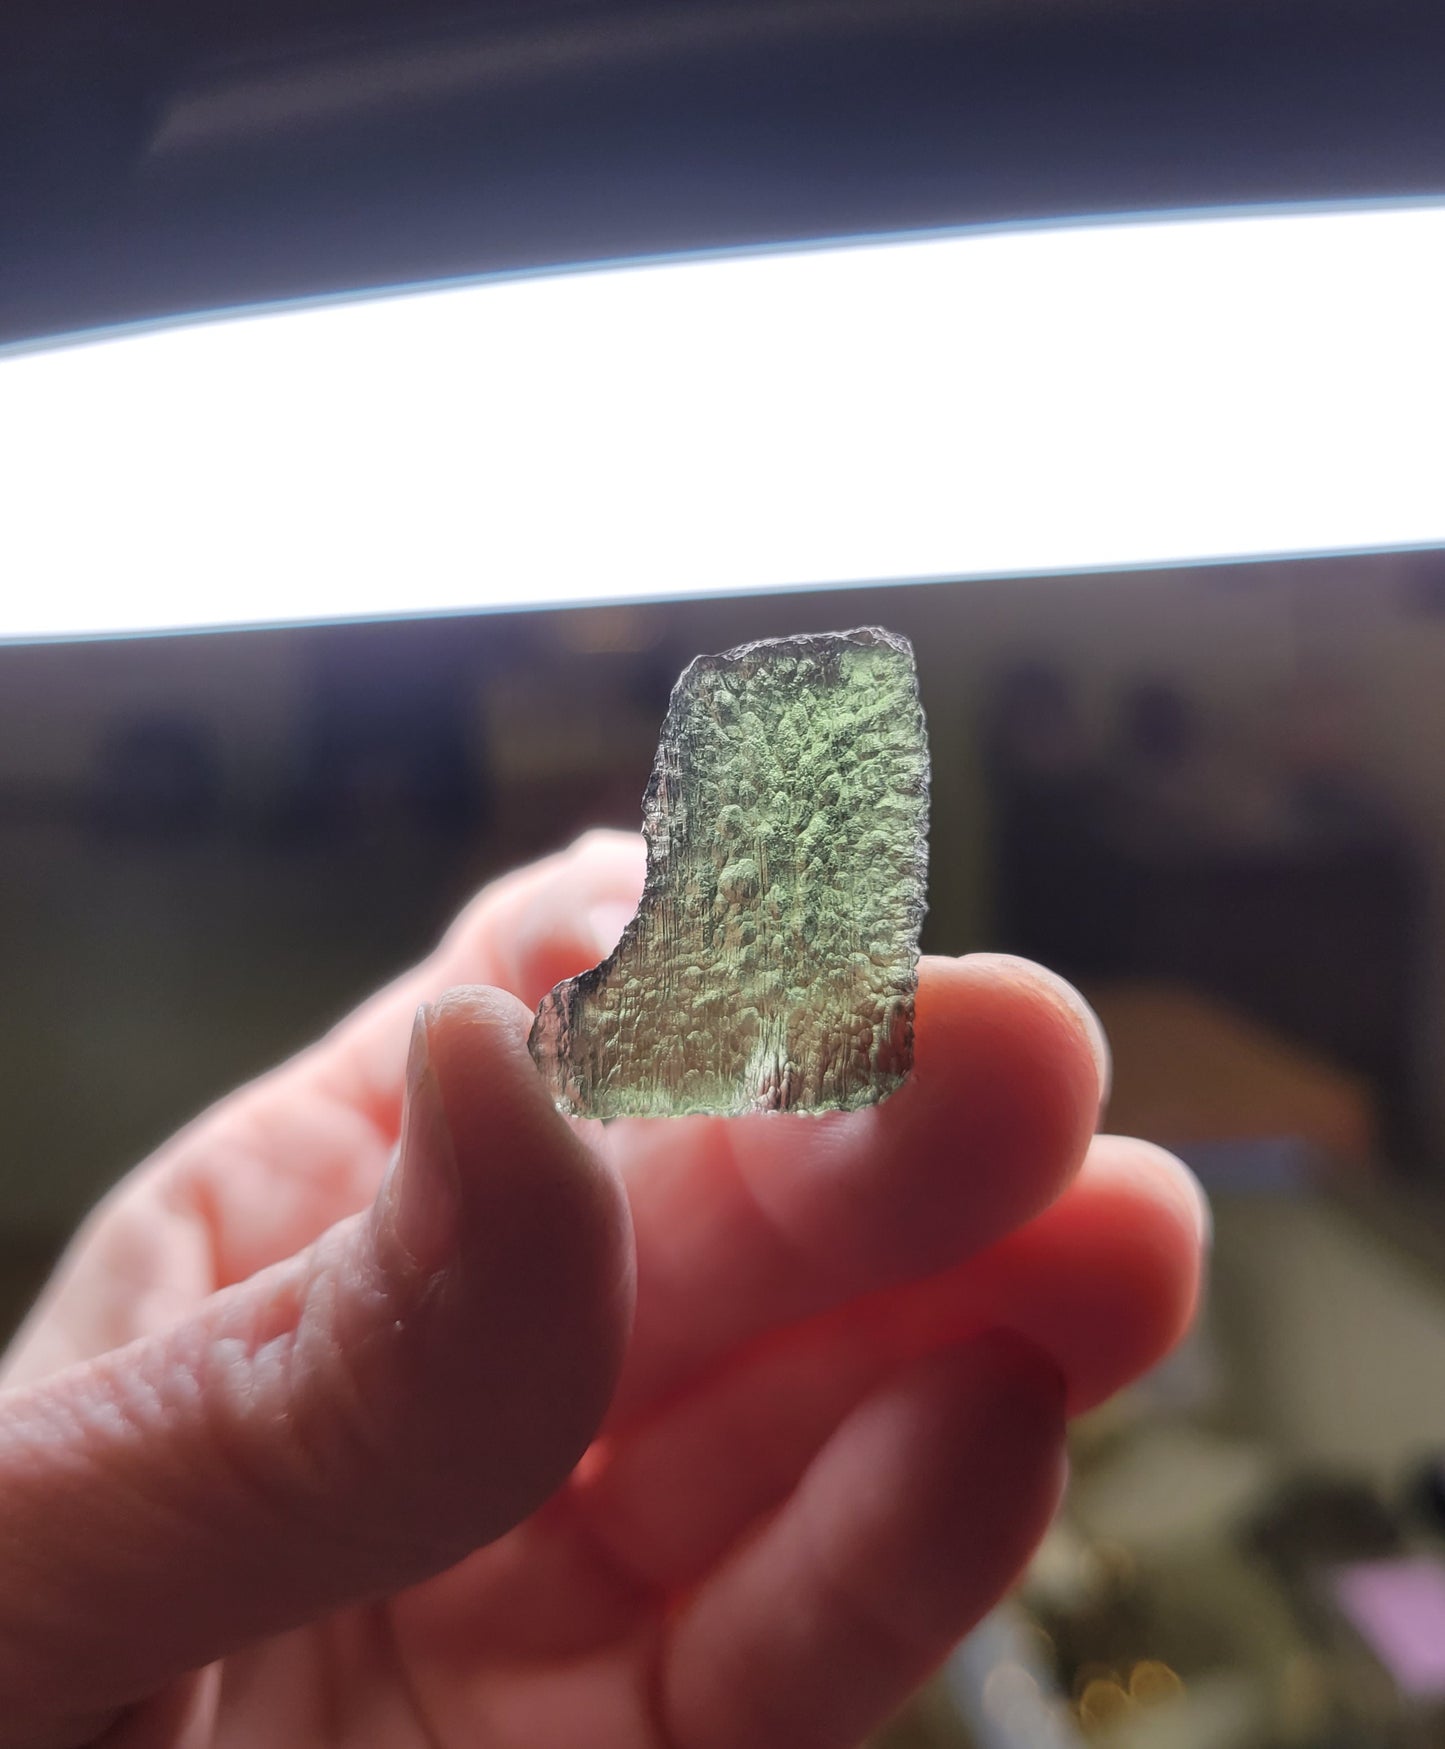 Moldavite from Chlum in the Czech Republic